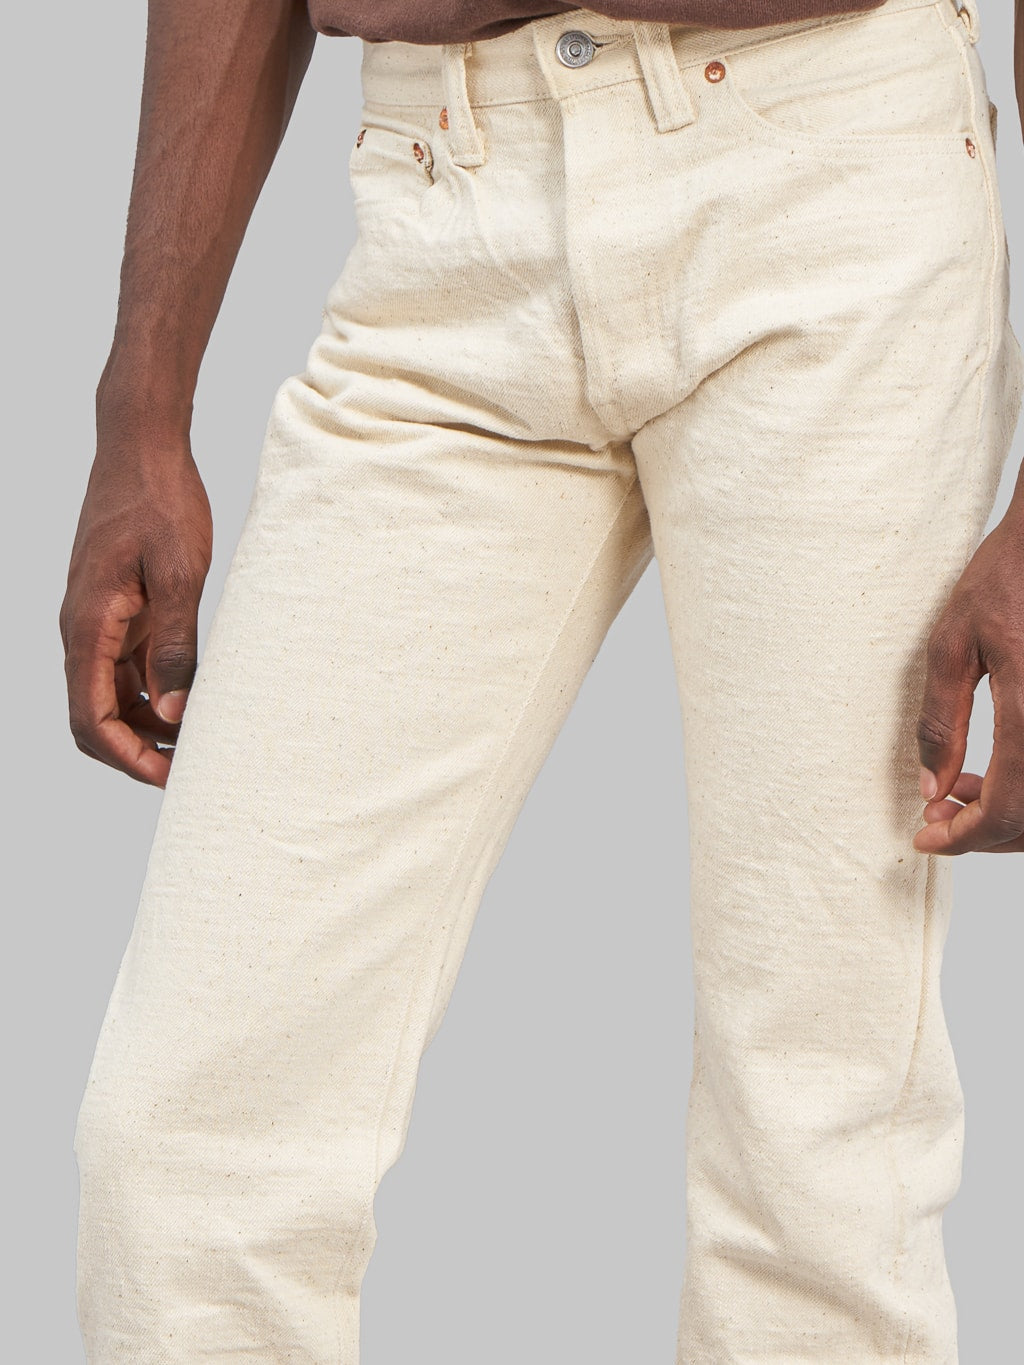 Samurai Jeans Japanese Cotton Ecru Jeans slim straight front rise